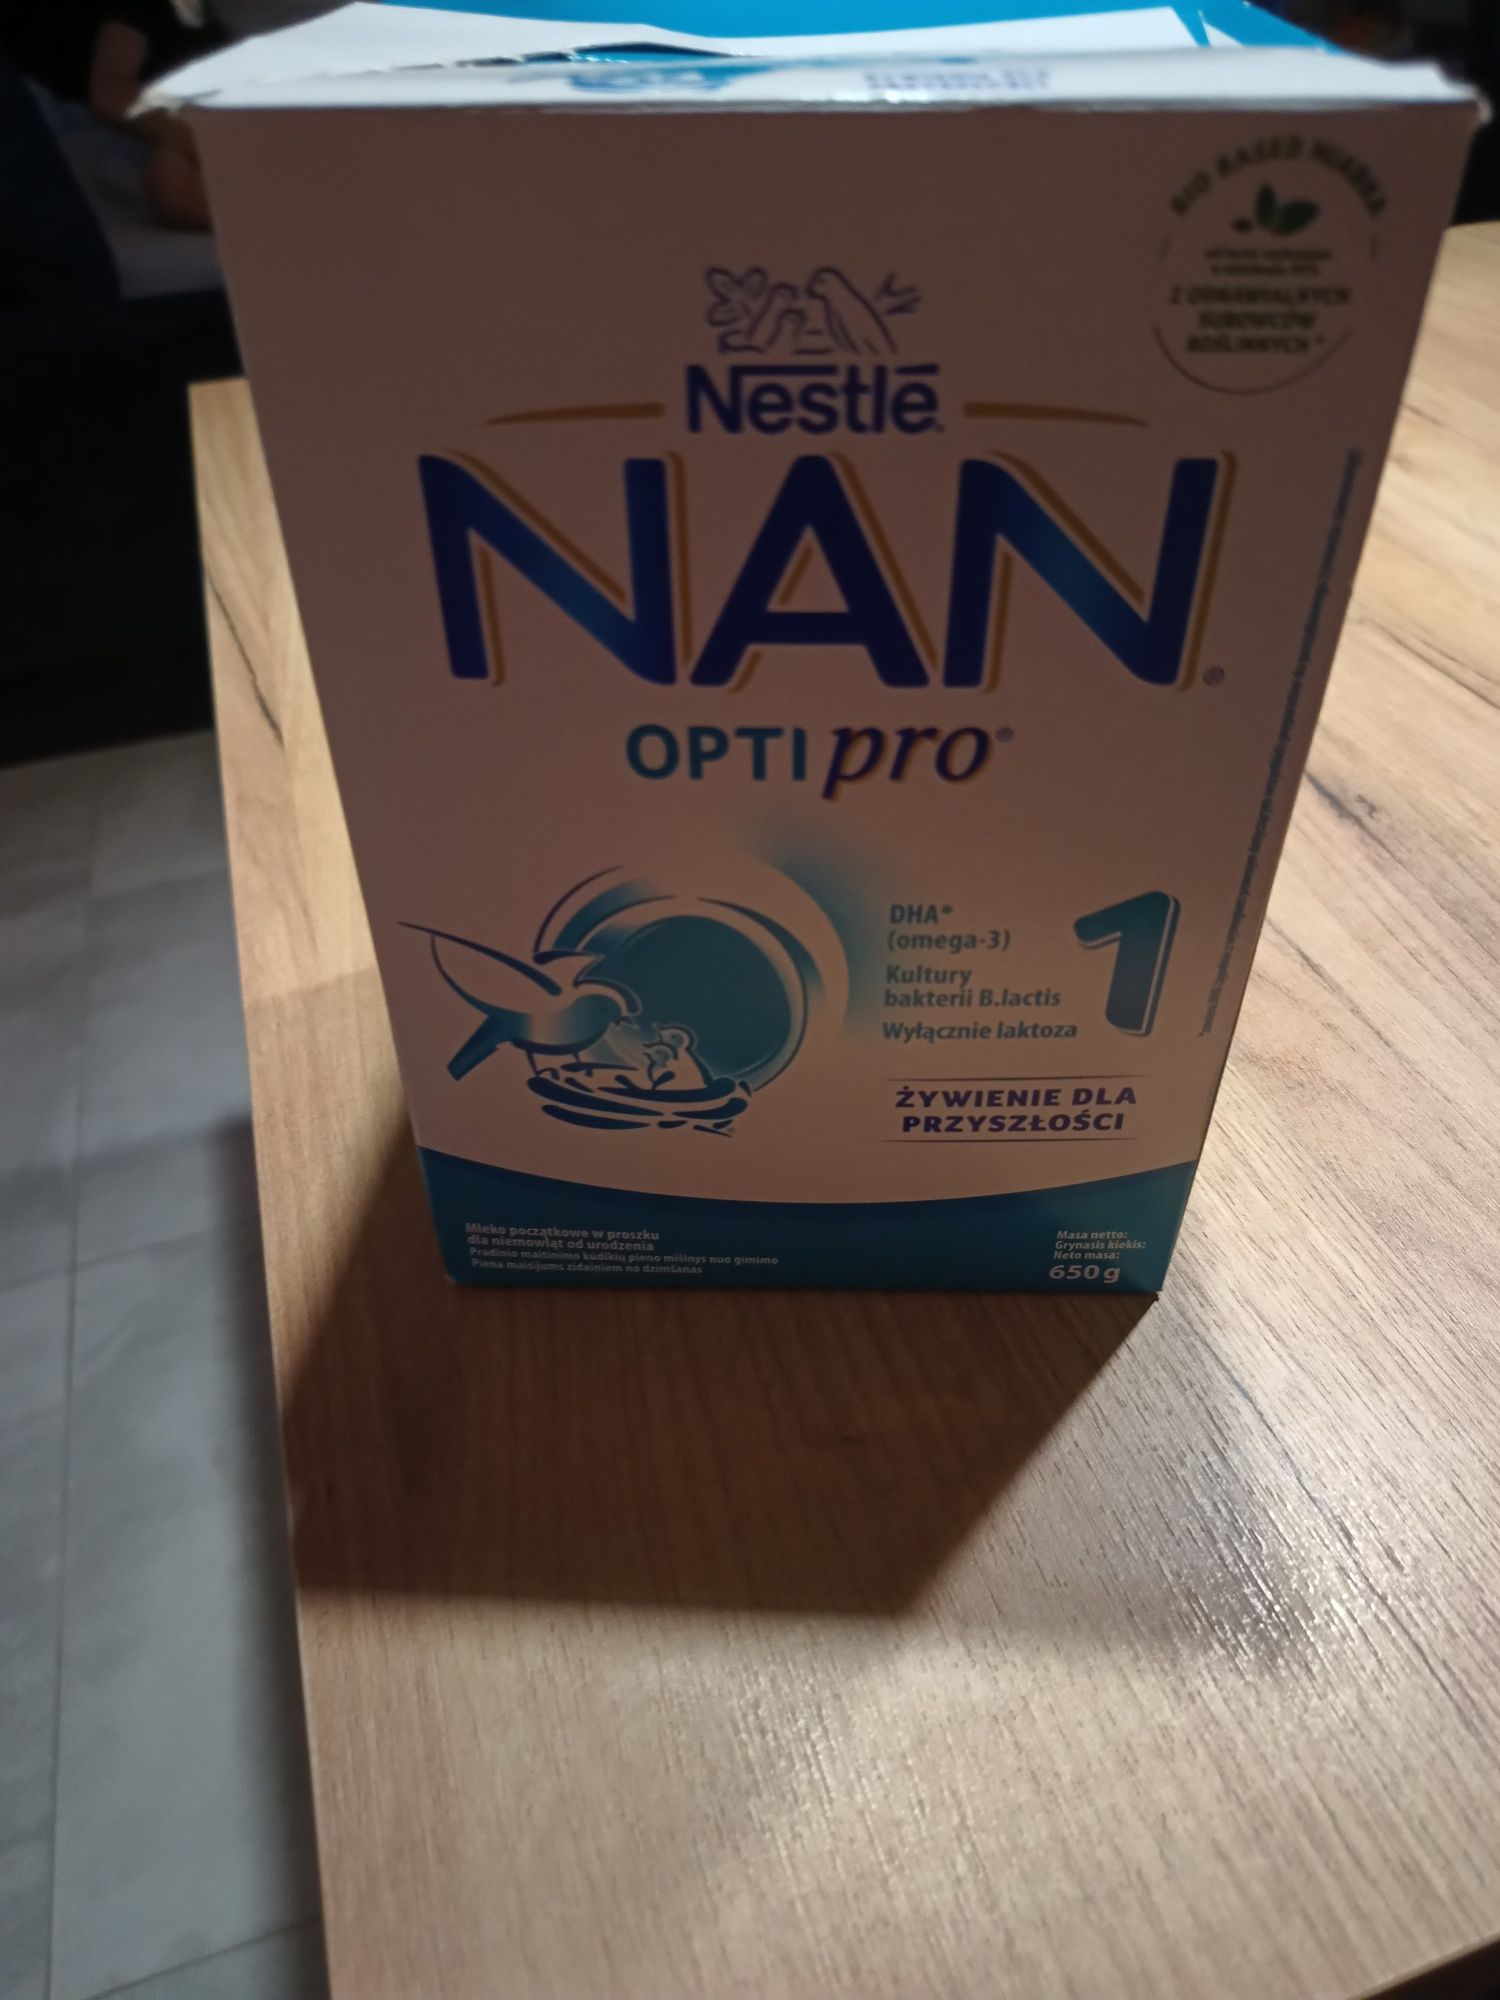 Nestle Nan optipro 1